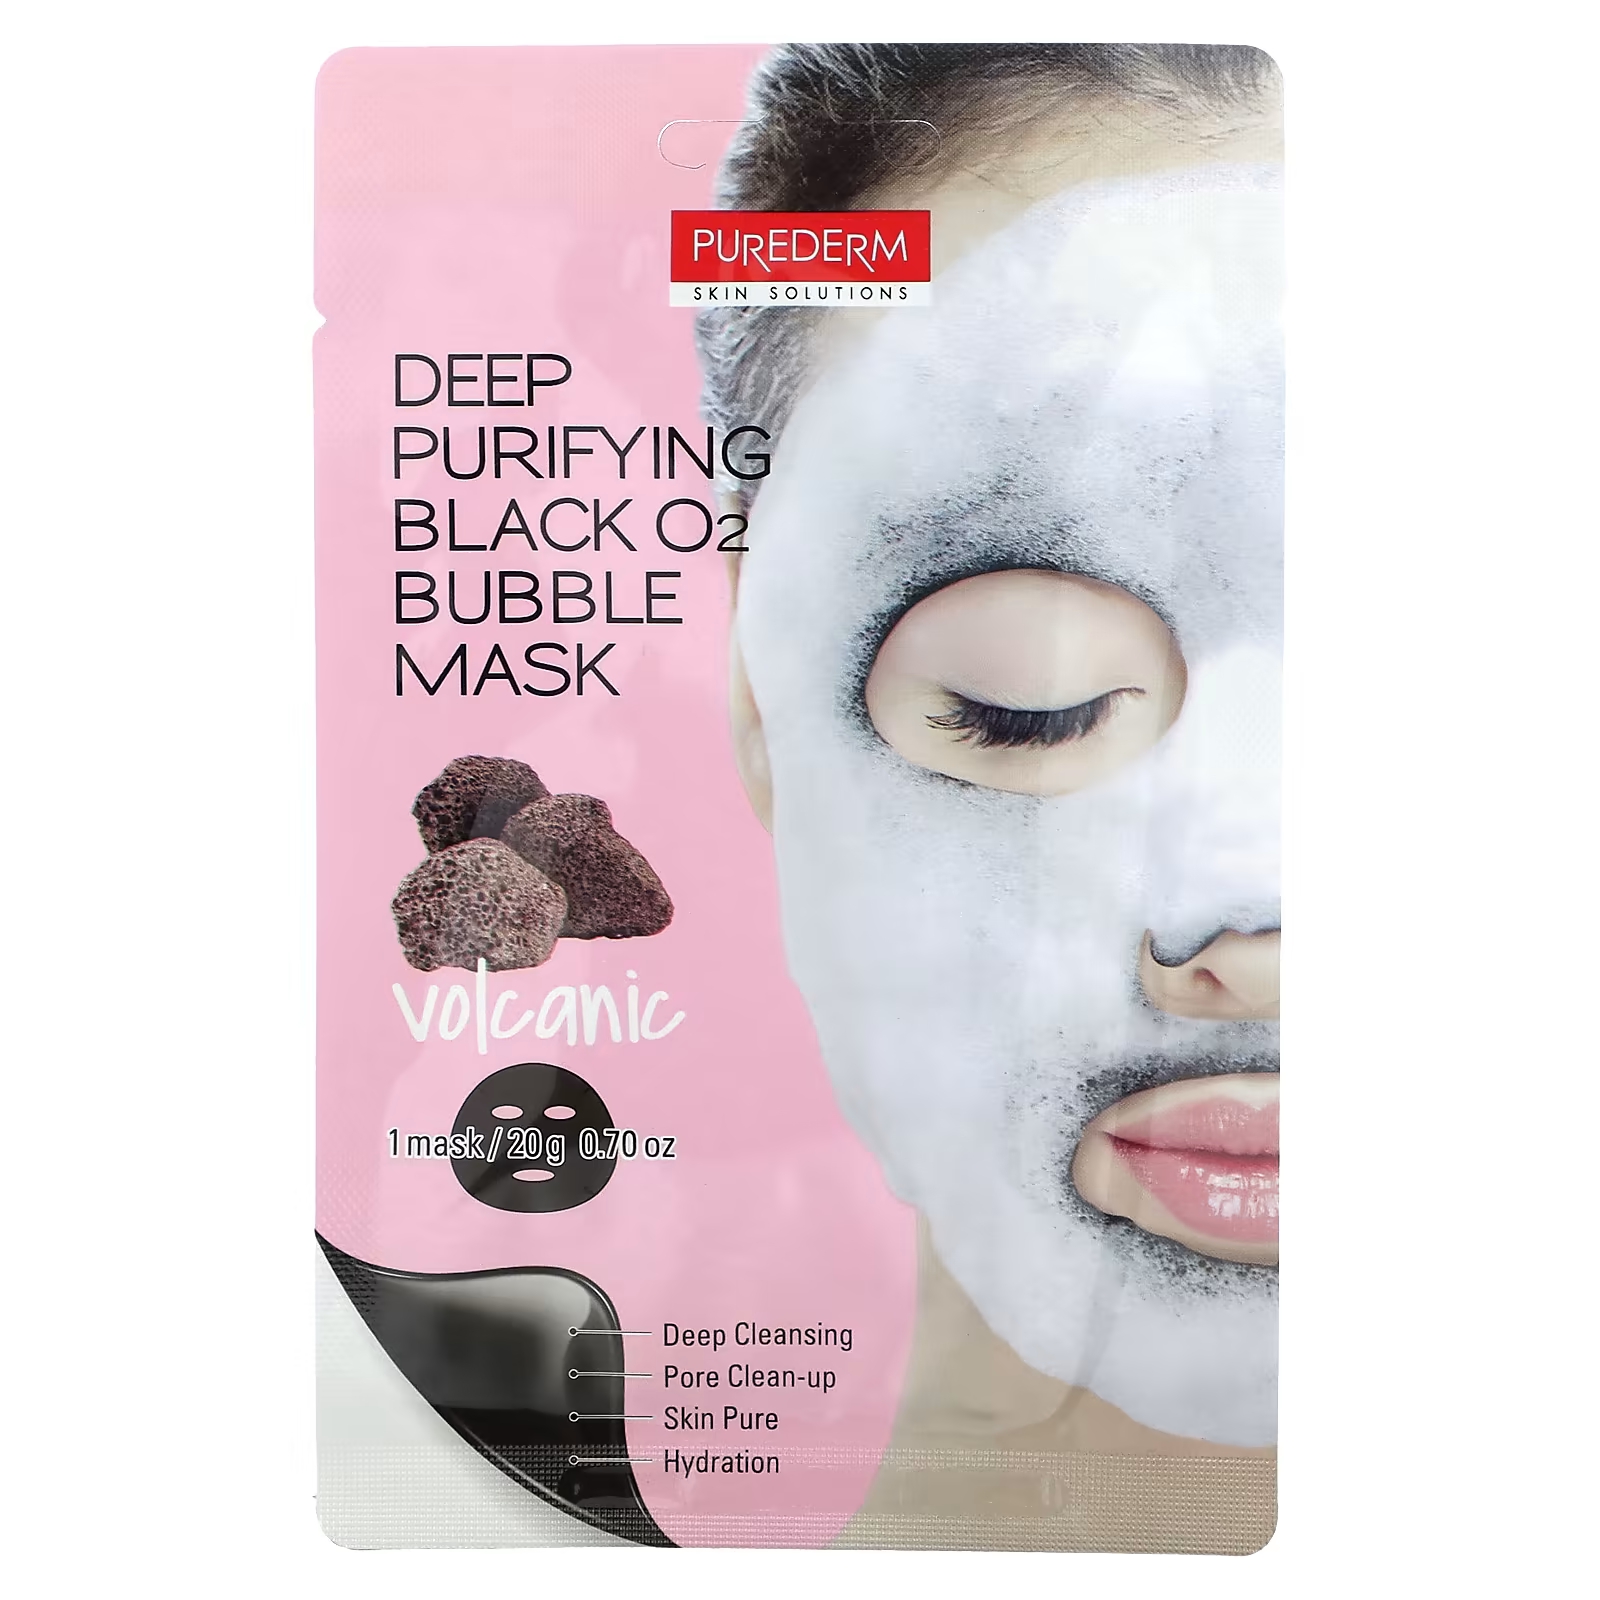 Purederm Deep Purifying Black O2 Bubble Beauty Mask Volcanic, 1 тканевая маска, 0,70 унции (20 г)